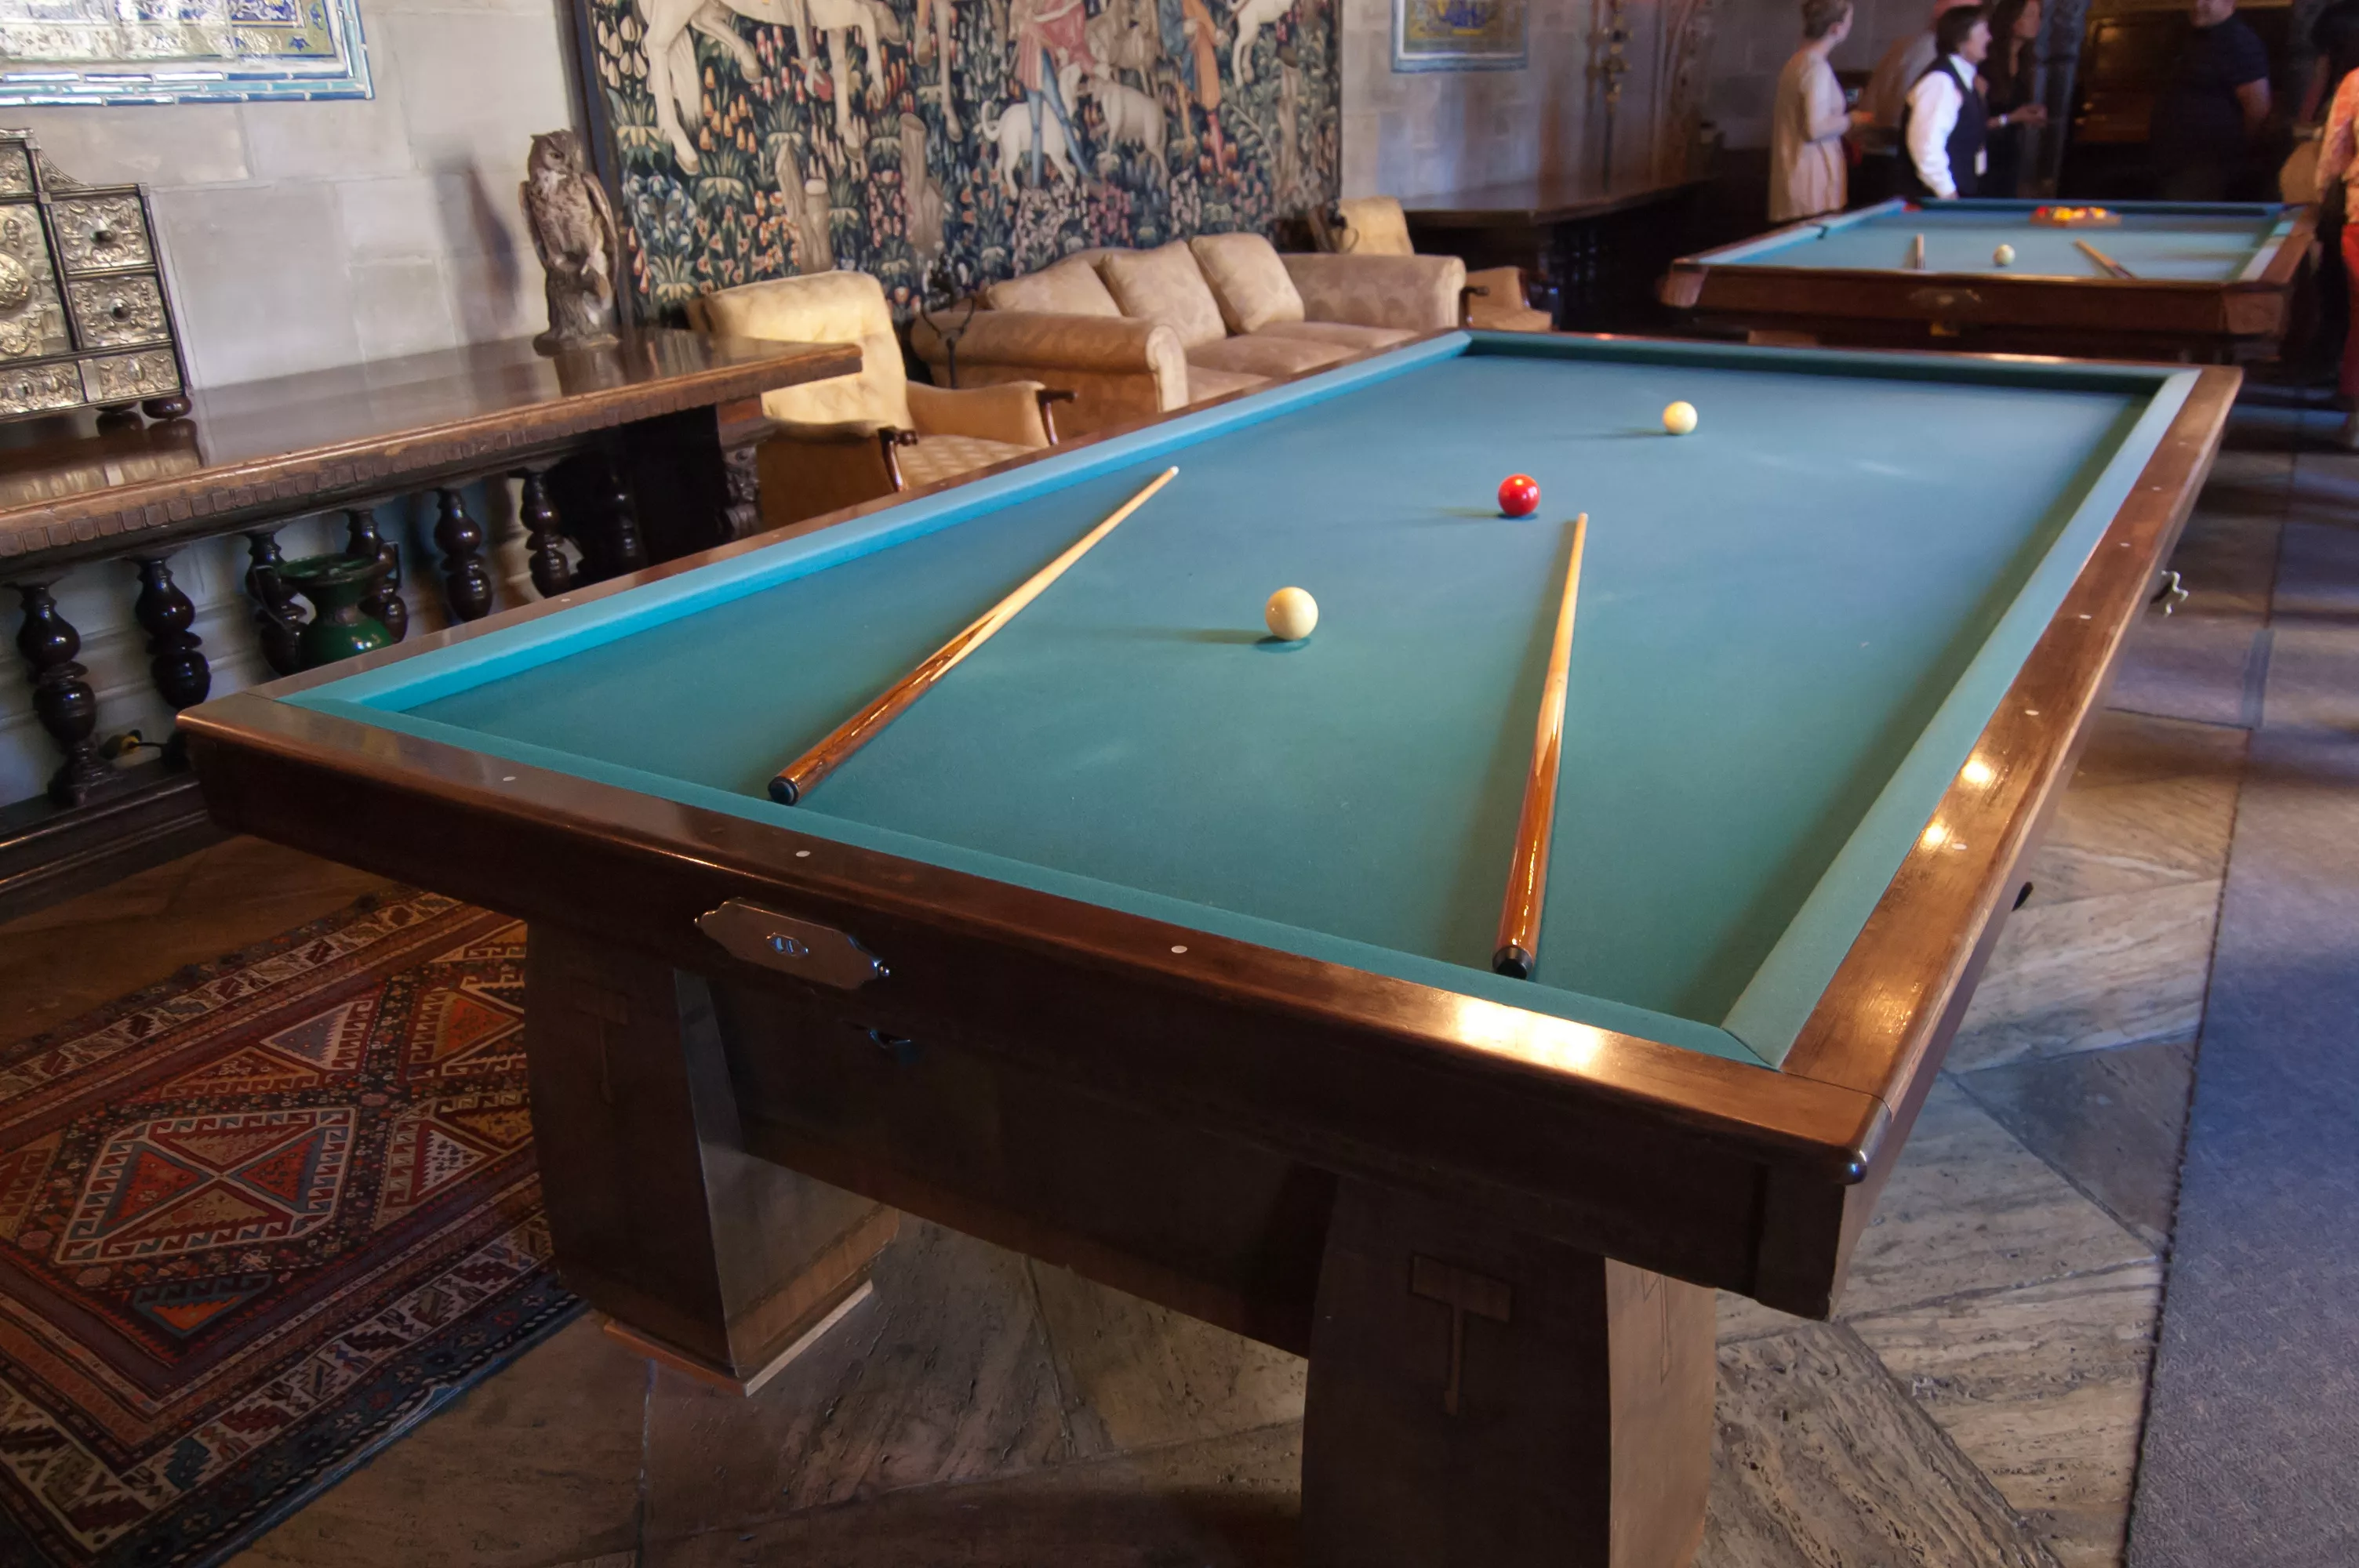 Magic Pool in Portugal, Europe | Billiards - Rated 3.6